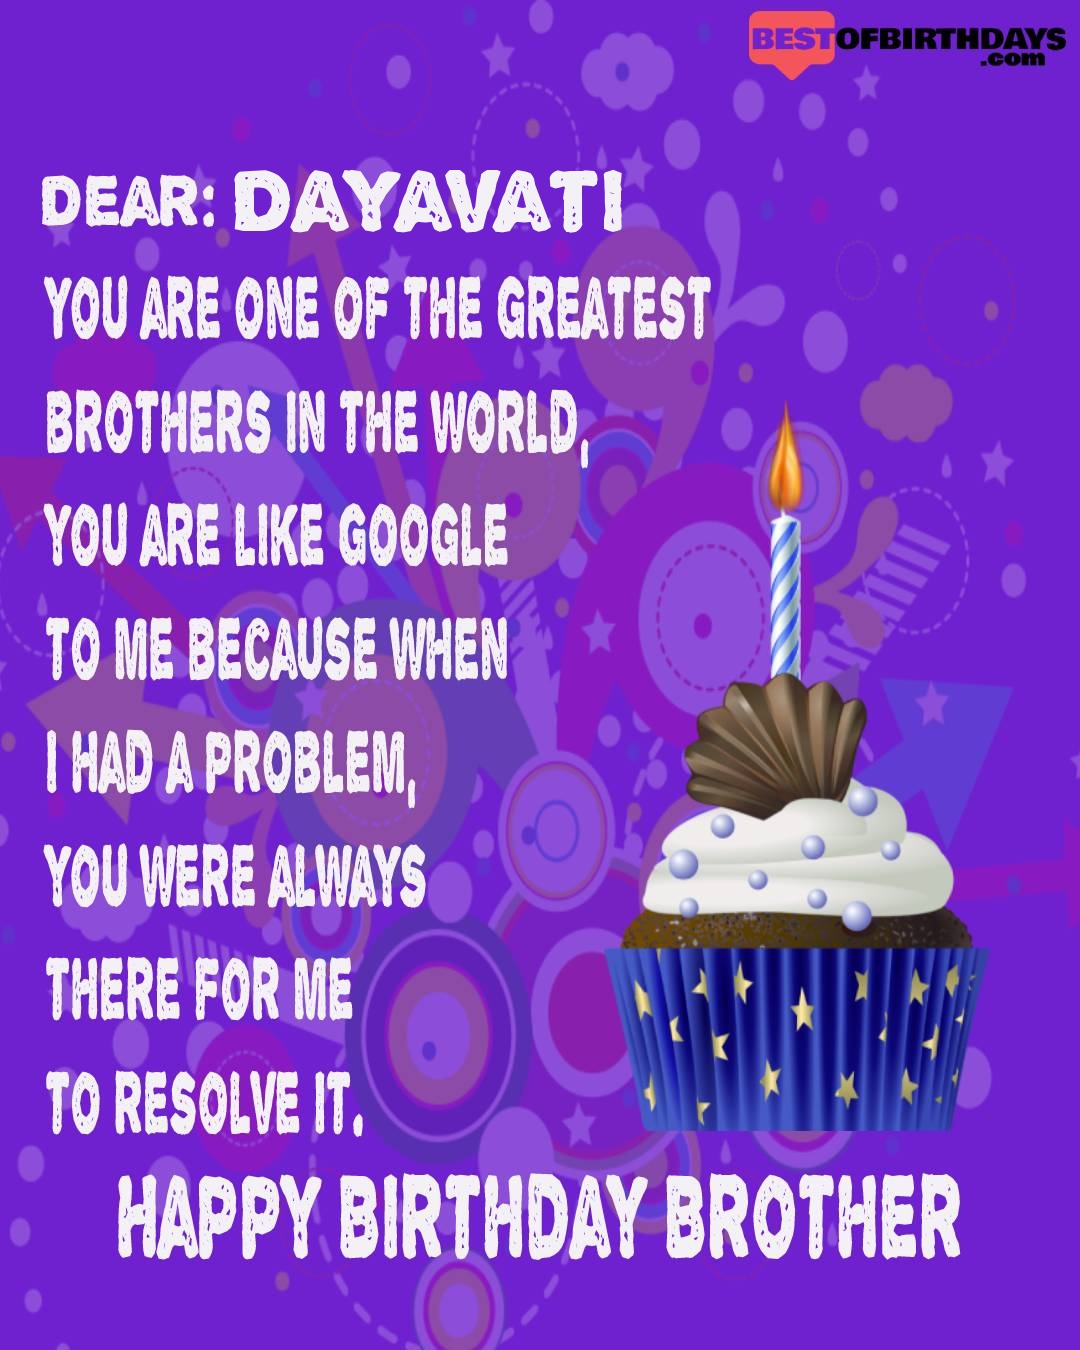 Happy birthday dayavati bhai brother bro